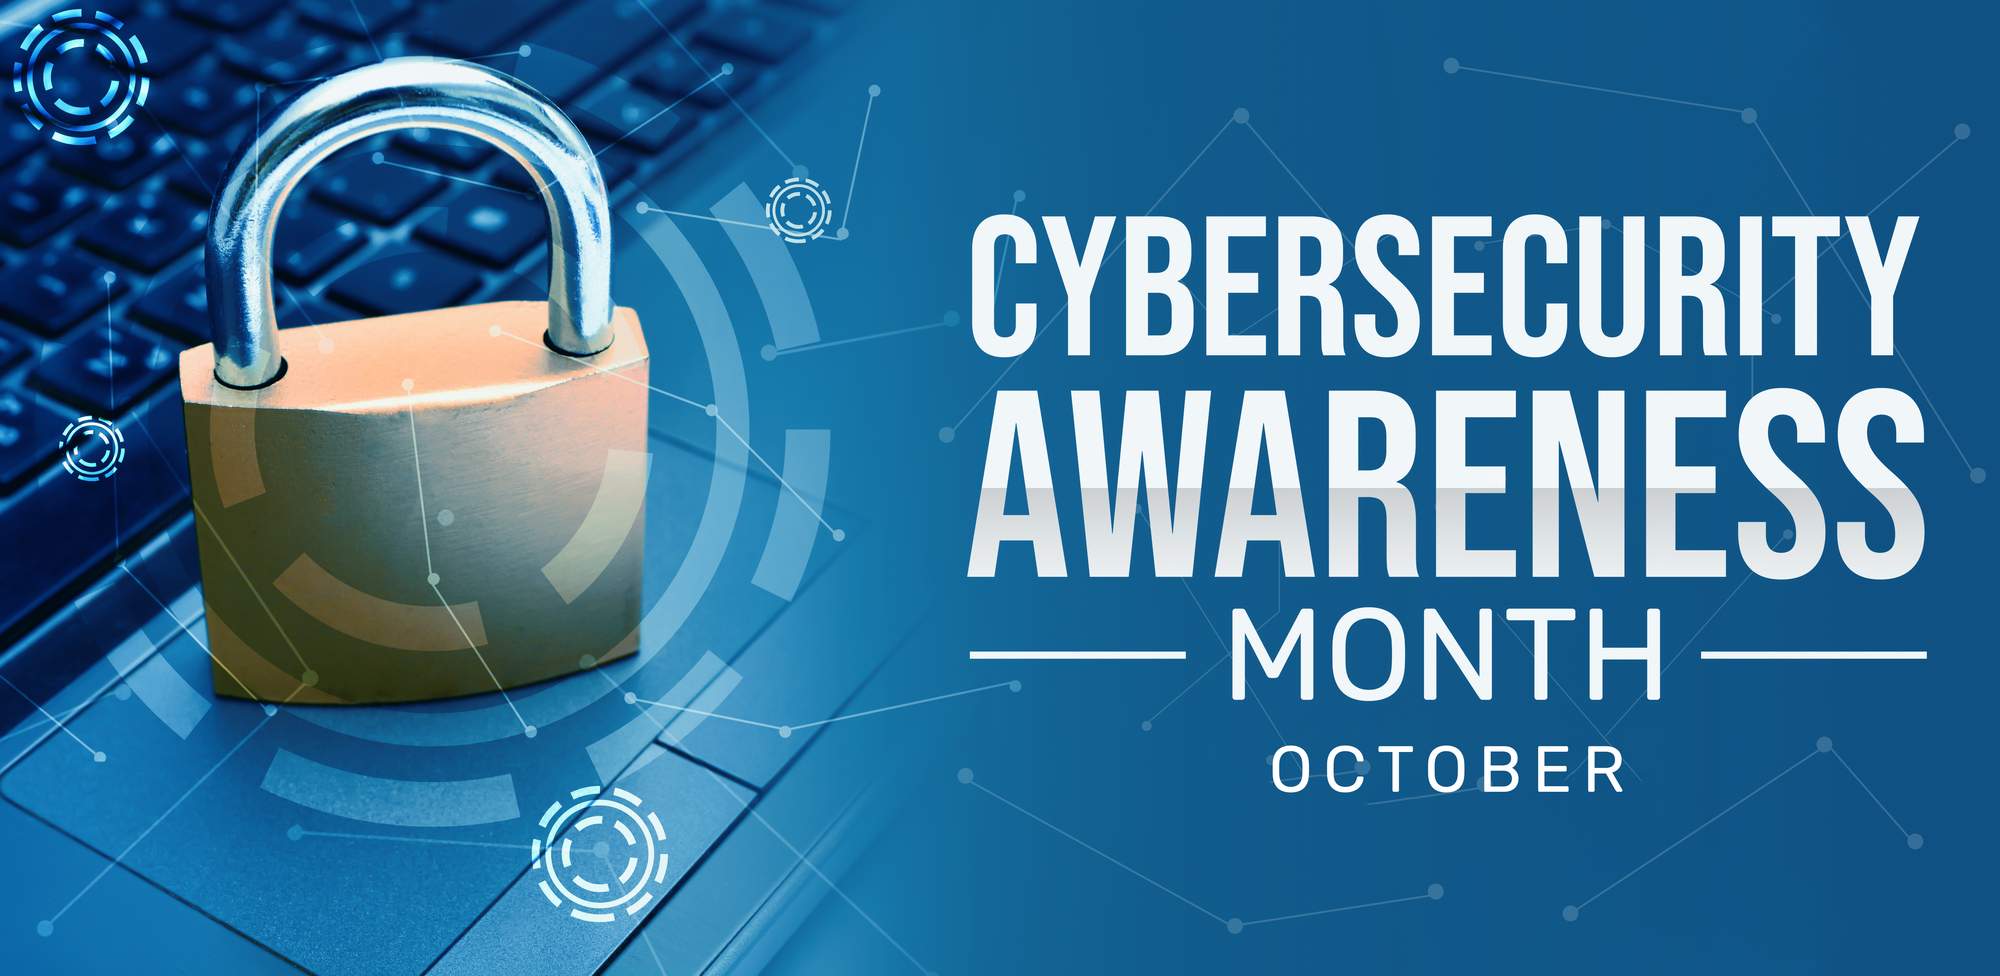 Halloween and Cybersecurity Awareness